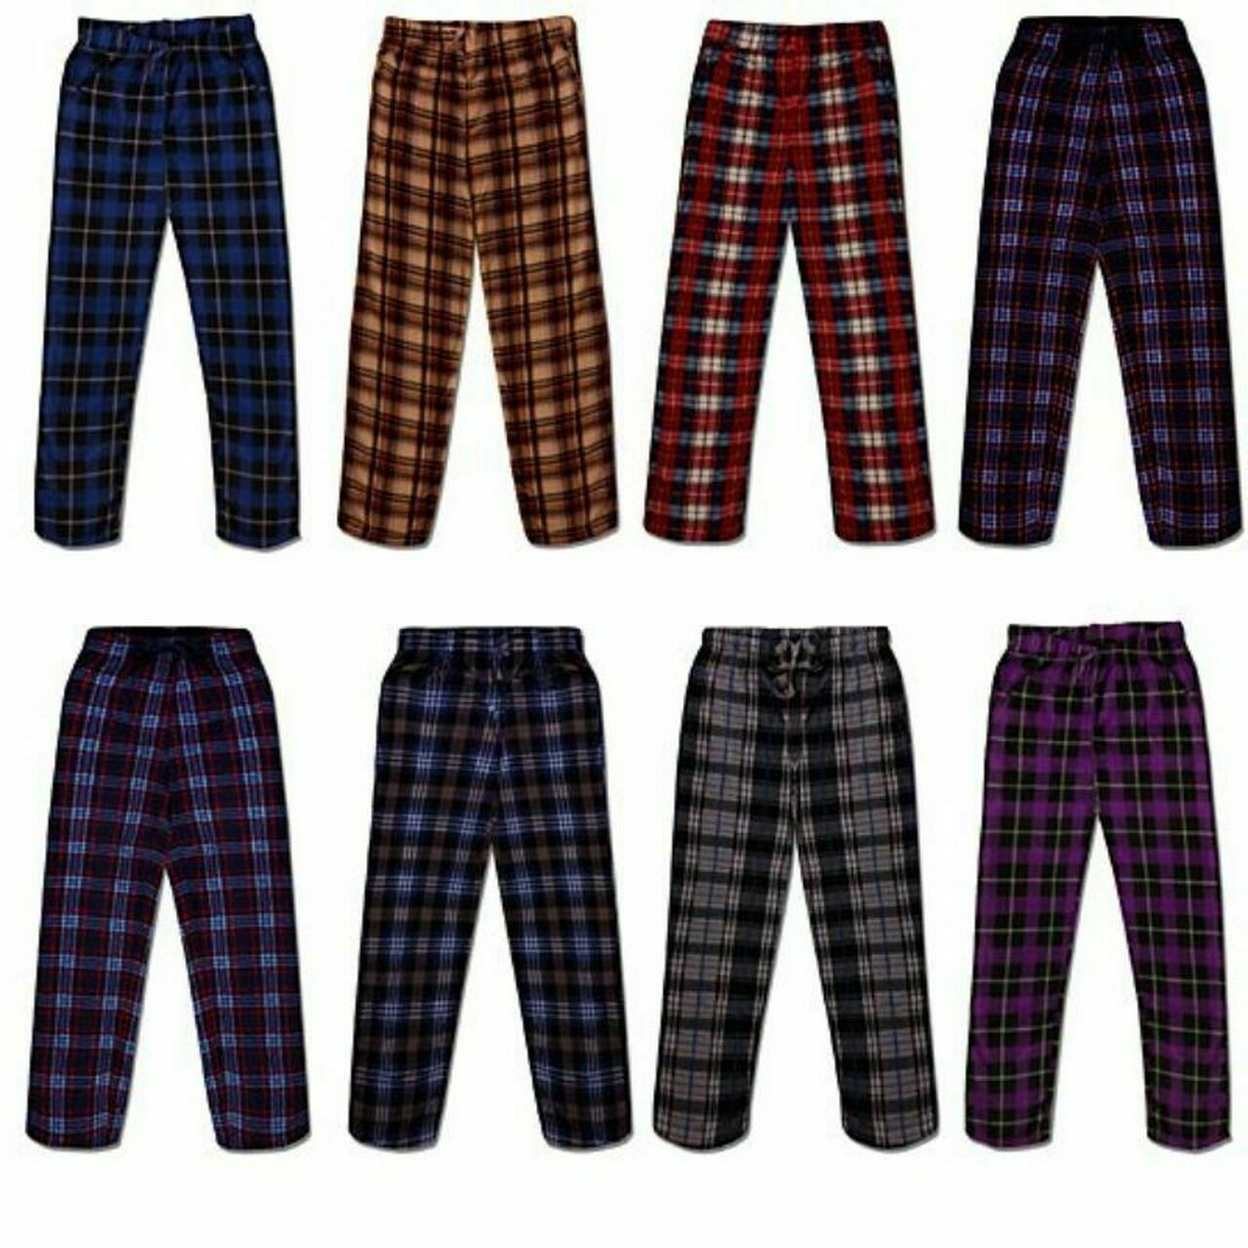 2-Pack: Men's Ultra Soft Cozy Flannel Fleece Plaid Pajama Sleep Bottom Lounge Pants - Black & Red, Large